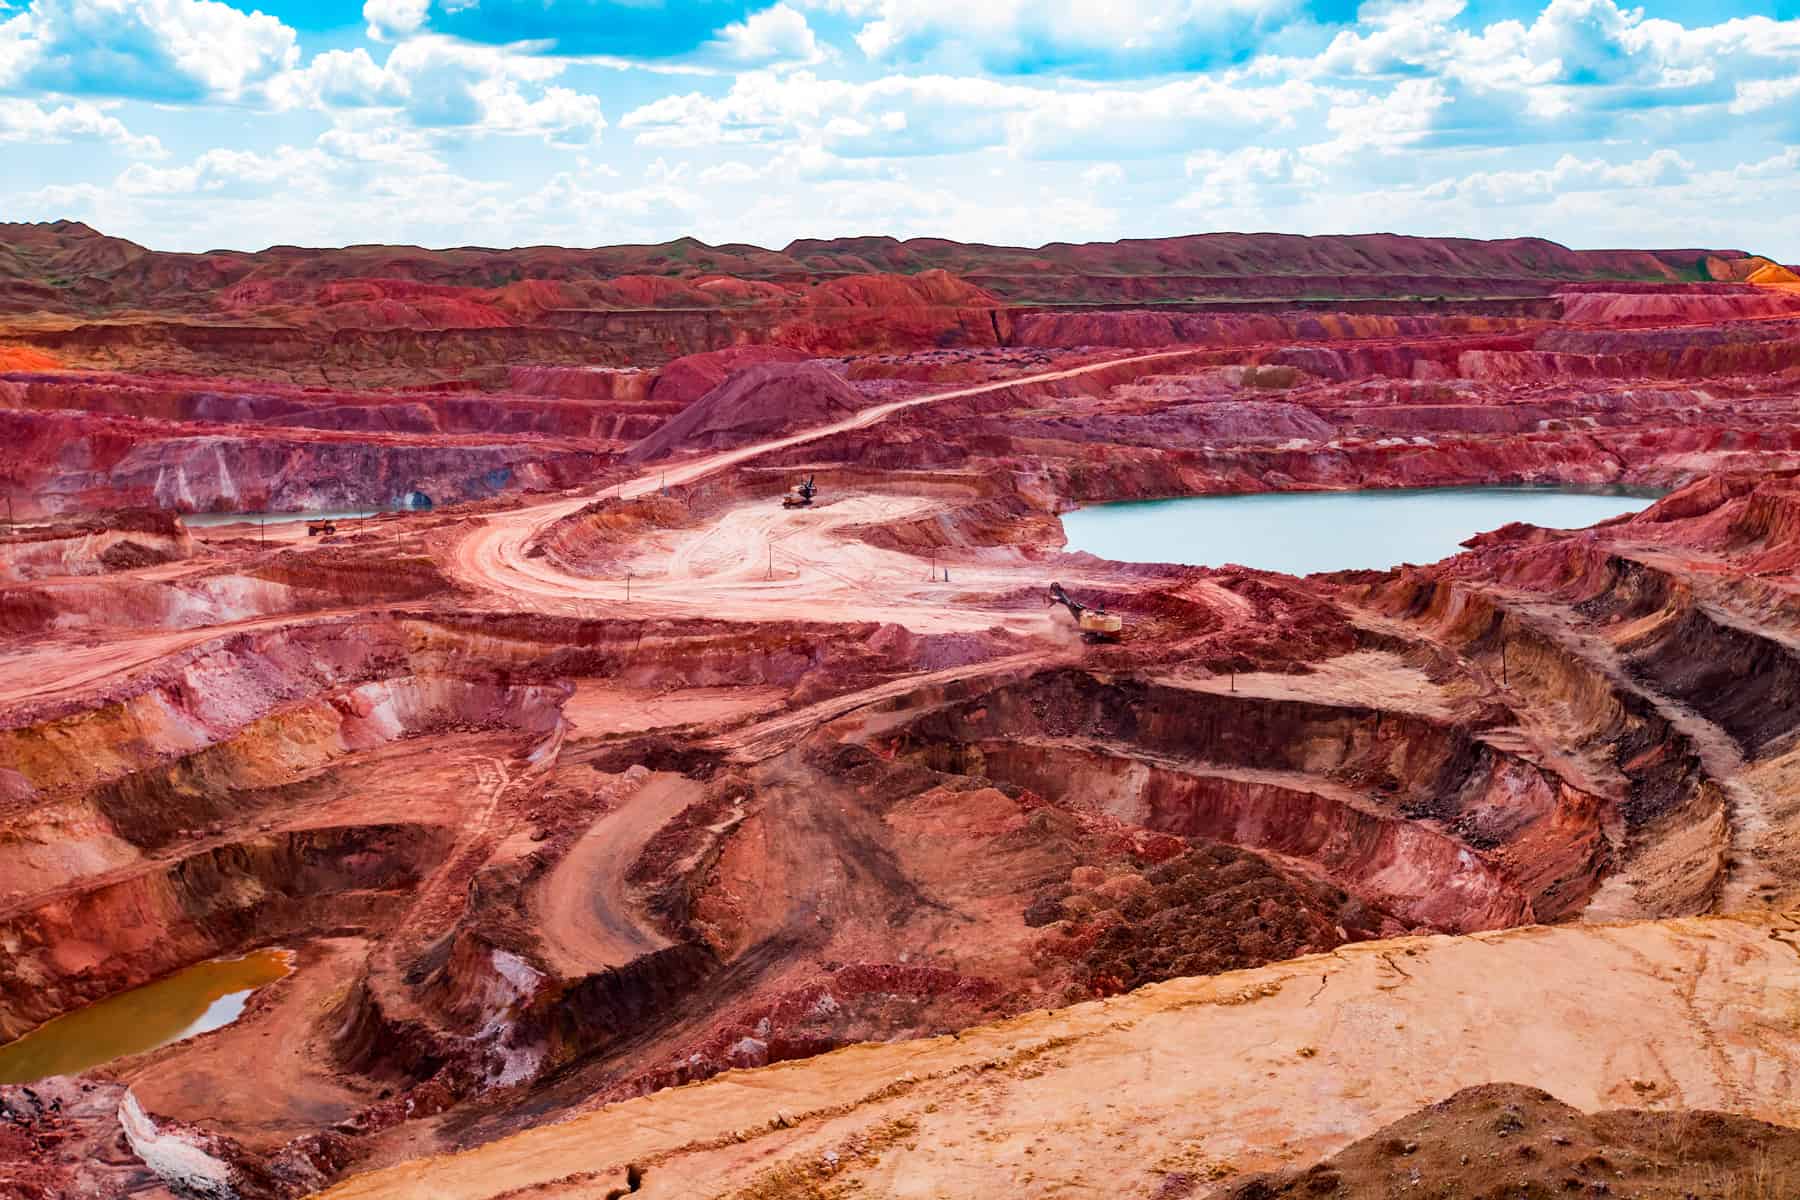 Manufacturer's aluminum ore quarry with excavators, dump trucks, and blue lake under a cloudy sky.